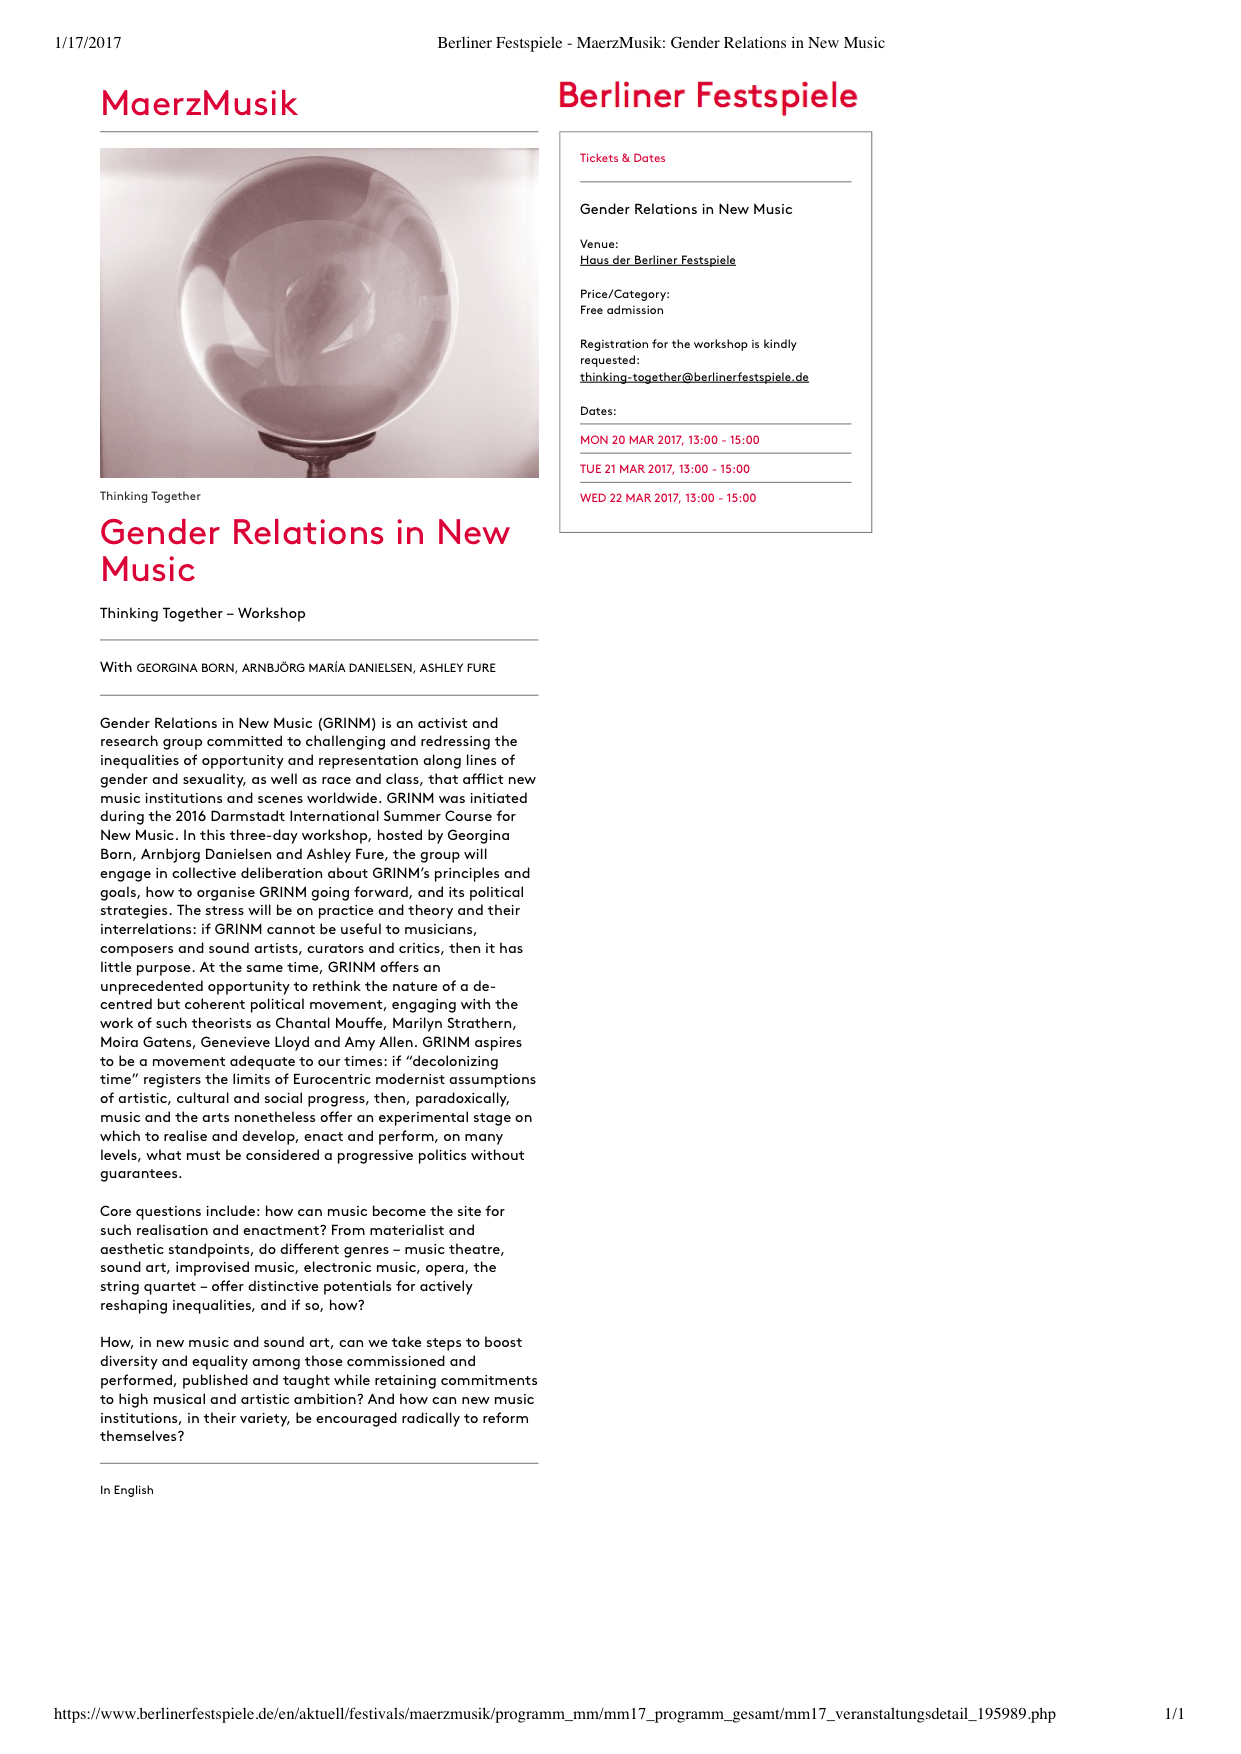 Preview of “Berliner Festspiele - MaerzMusik- Gender Relations in New Music”